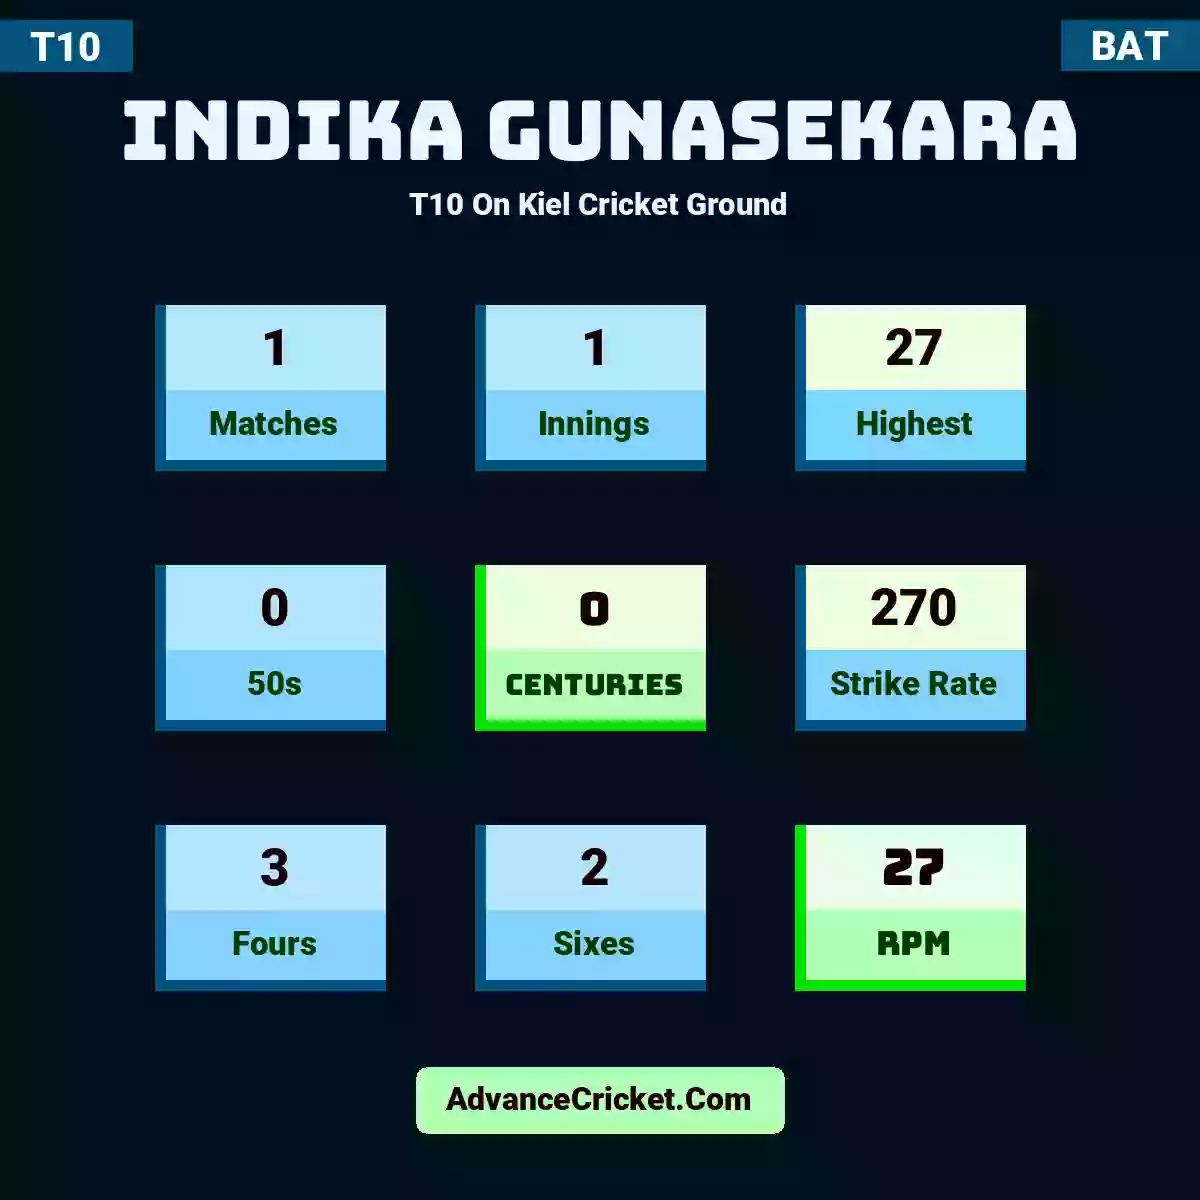 Indika gunasekara T10  On Kiel Cricket Ground, Indika gunasekara played 1 matches, scored 27 runs as highest, 0 half-centuries, and 0 centuries, with a strike rate of 270. I.gunasekara hit 3 fours and 2 sixes, with an RPM of 27.